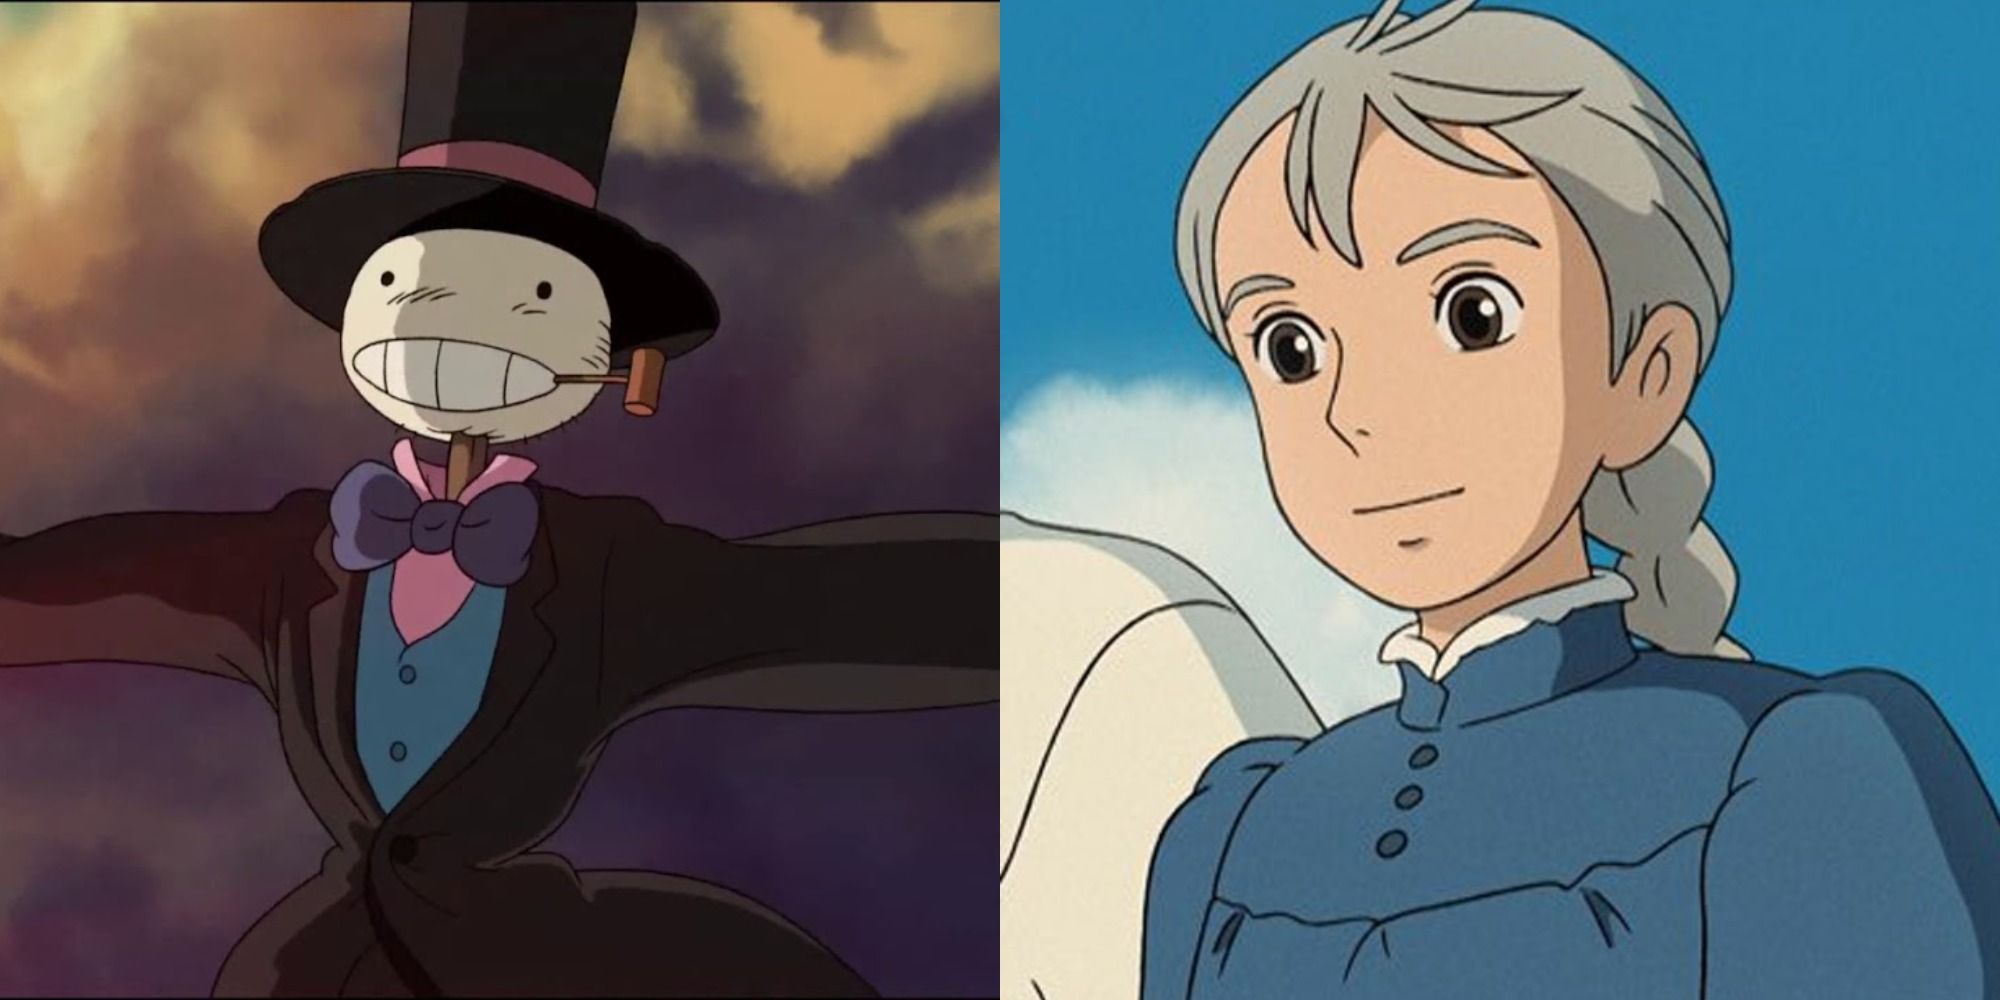 Sana: Howl and Sophie, Howl's Moving Castle, cute happy, Ghibli studio,  lovely fantasy, by Hayao Miyazaki